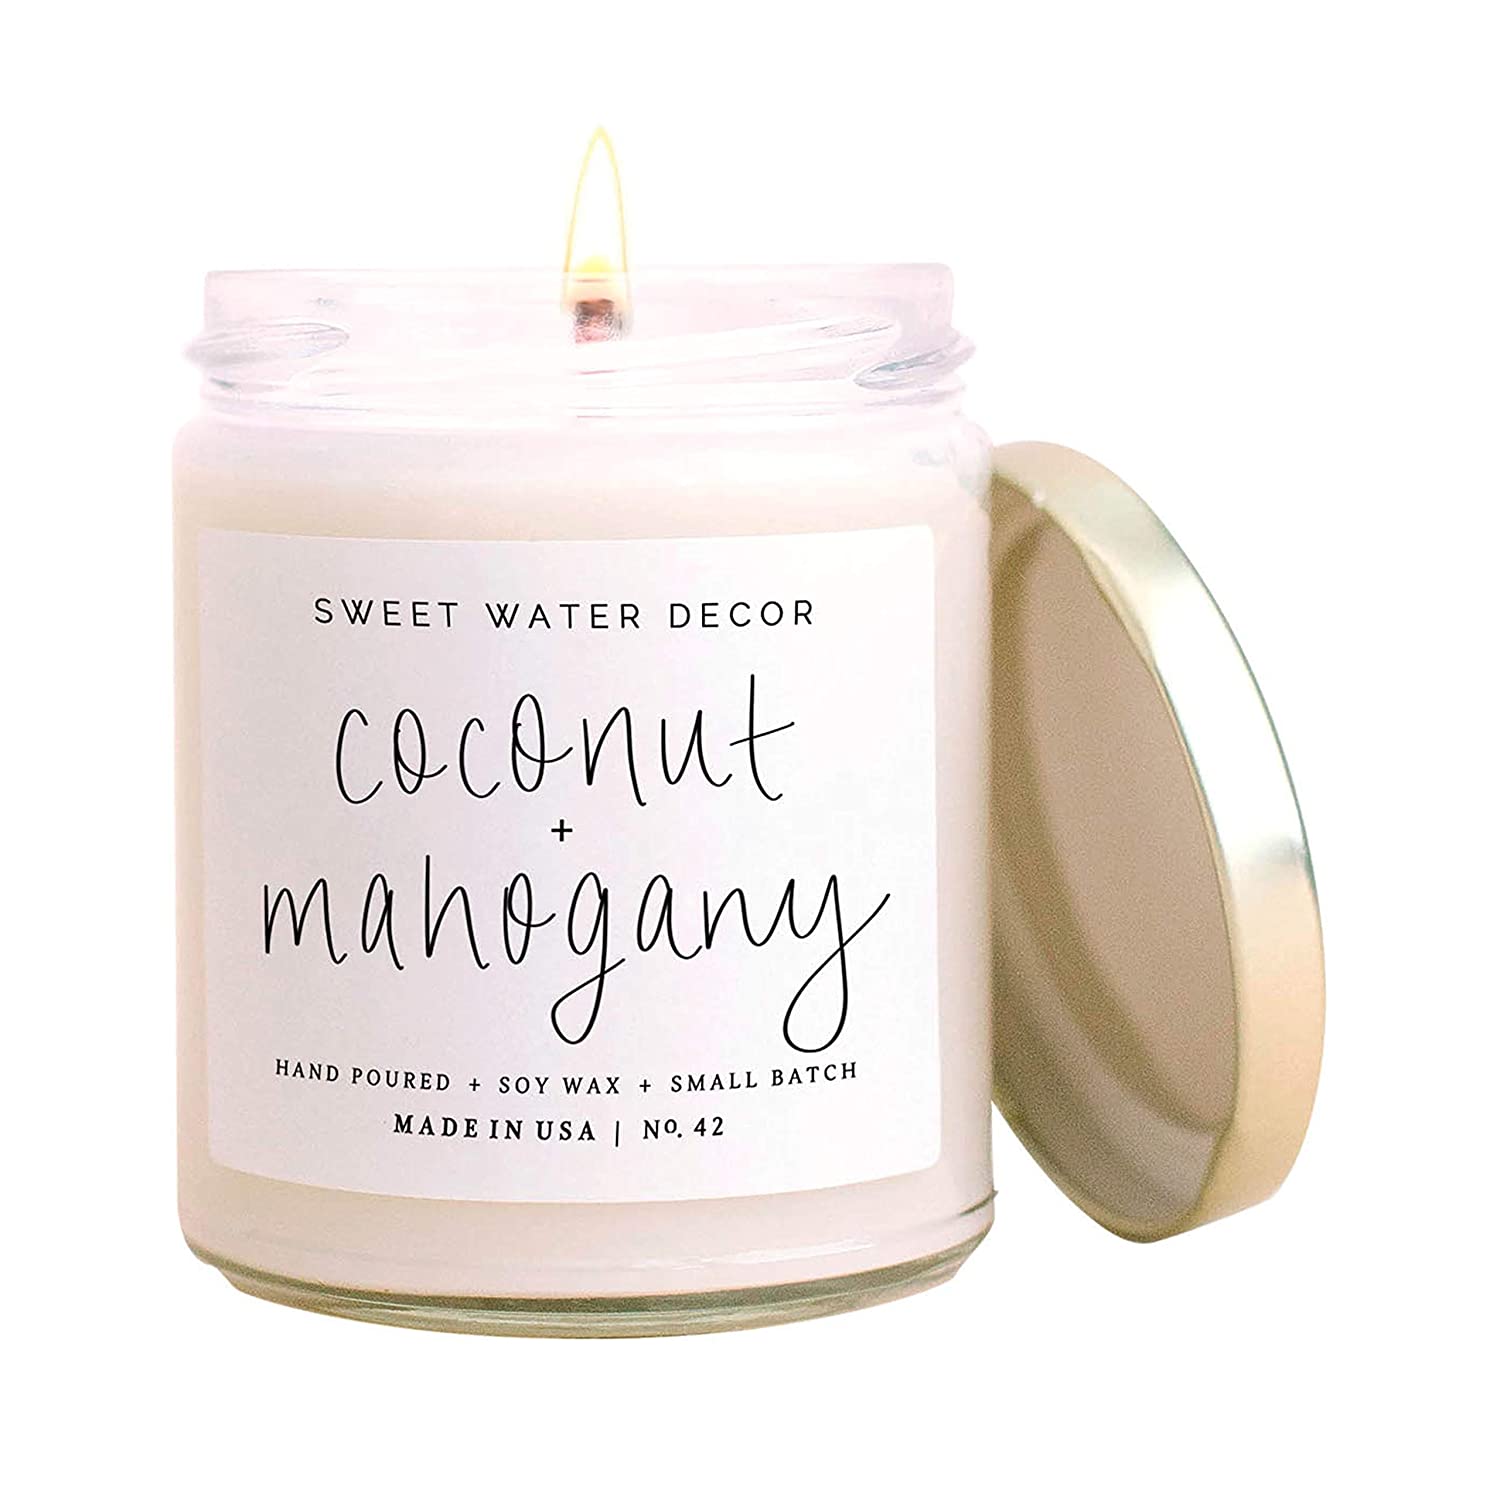 Sweet Water Decor Coconut + Mahogany Candle